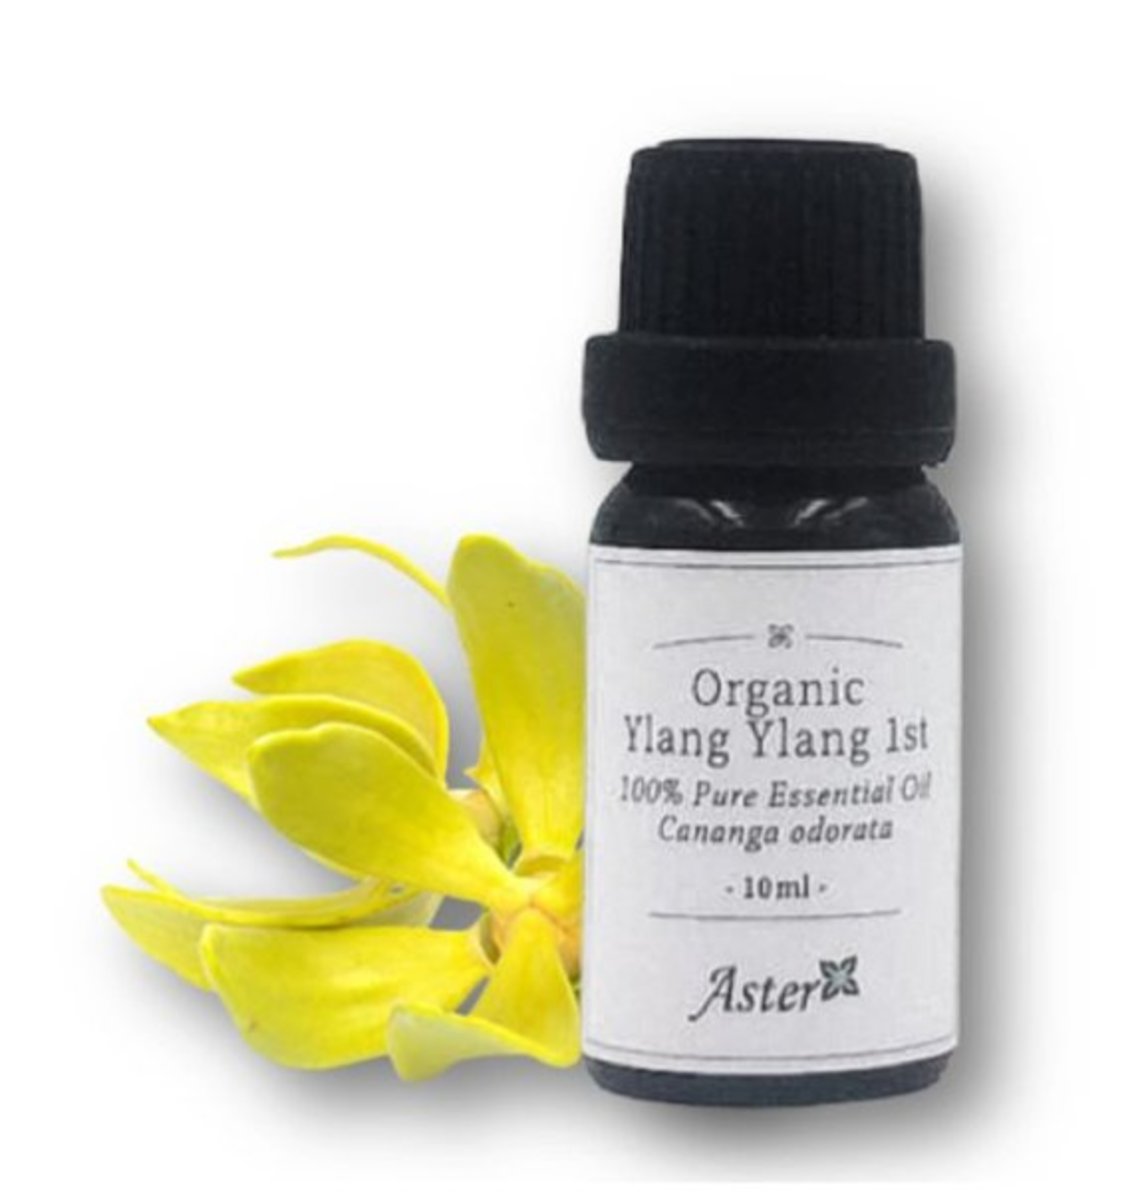 Organic Ylang Ylang 1st Essential Oil (Cananga odorata) - 10ml